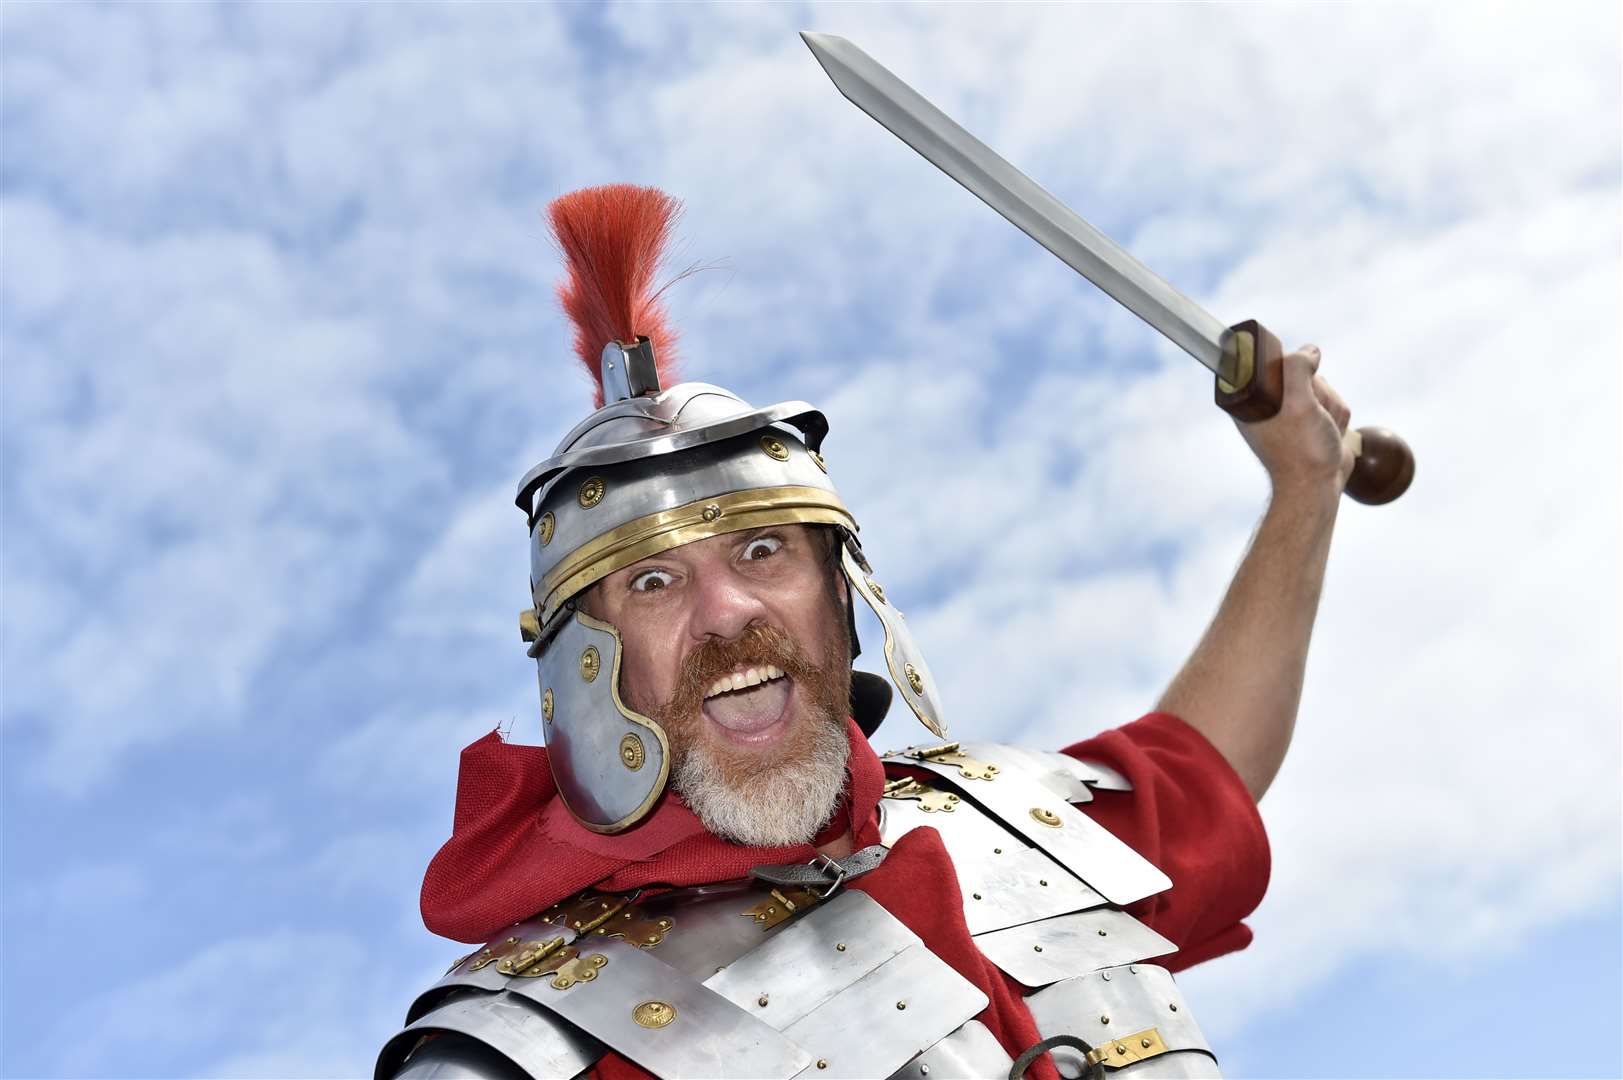 Pete Fishlock as a Roman warrior